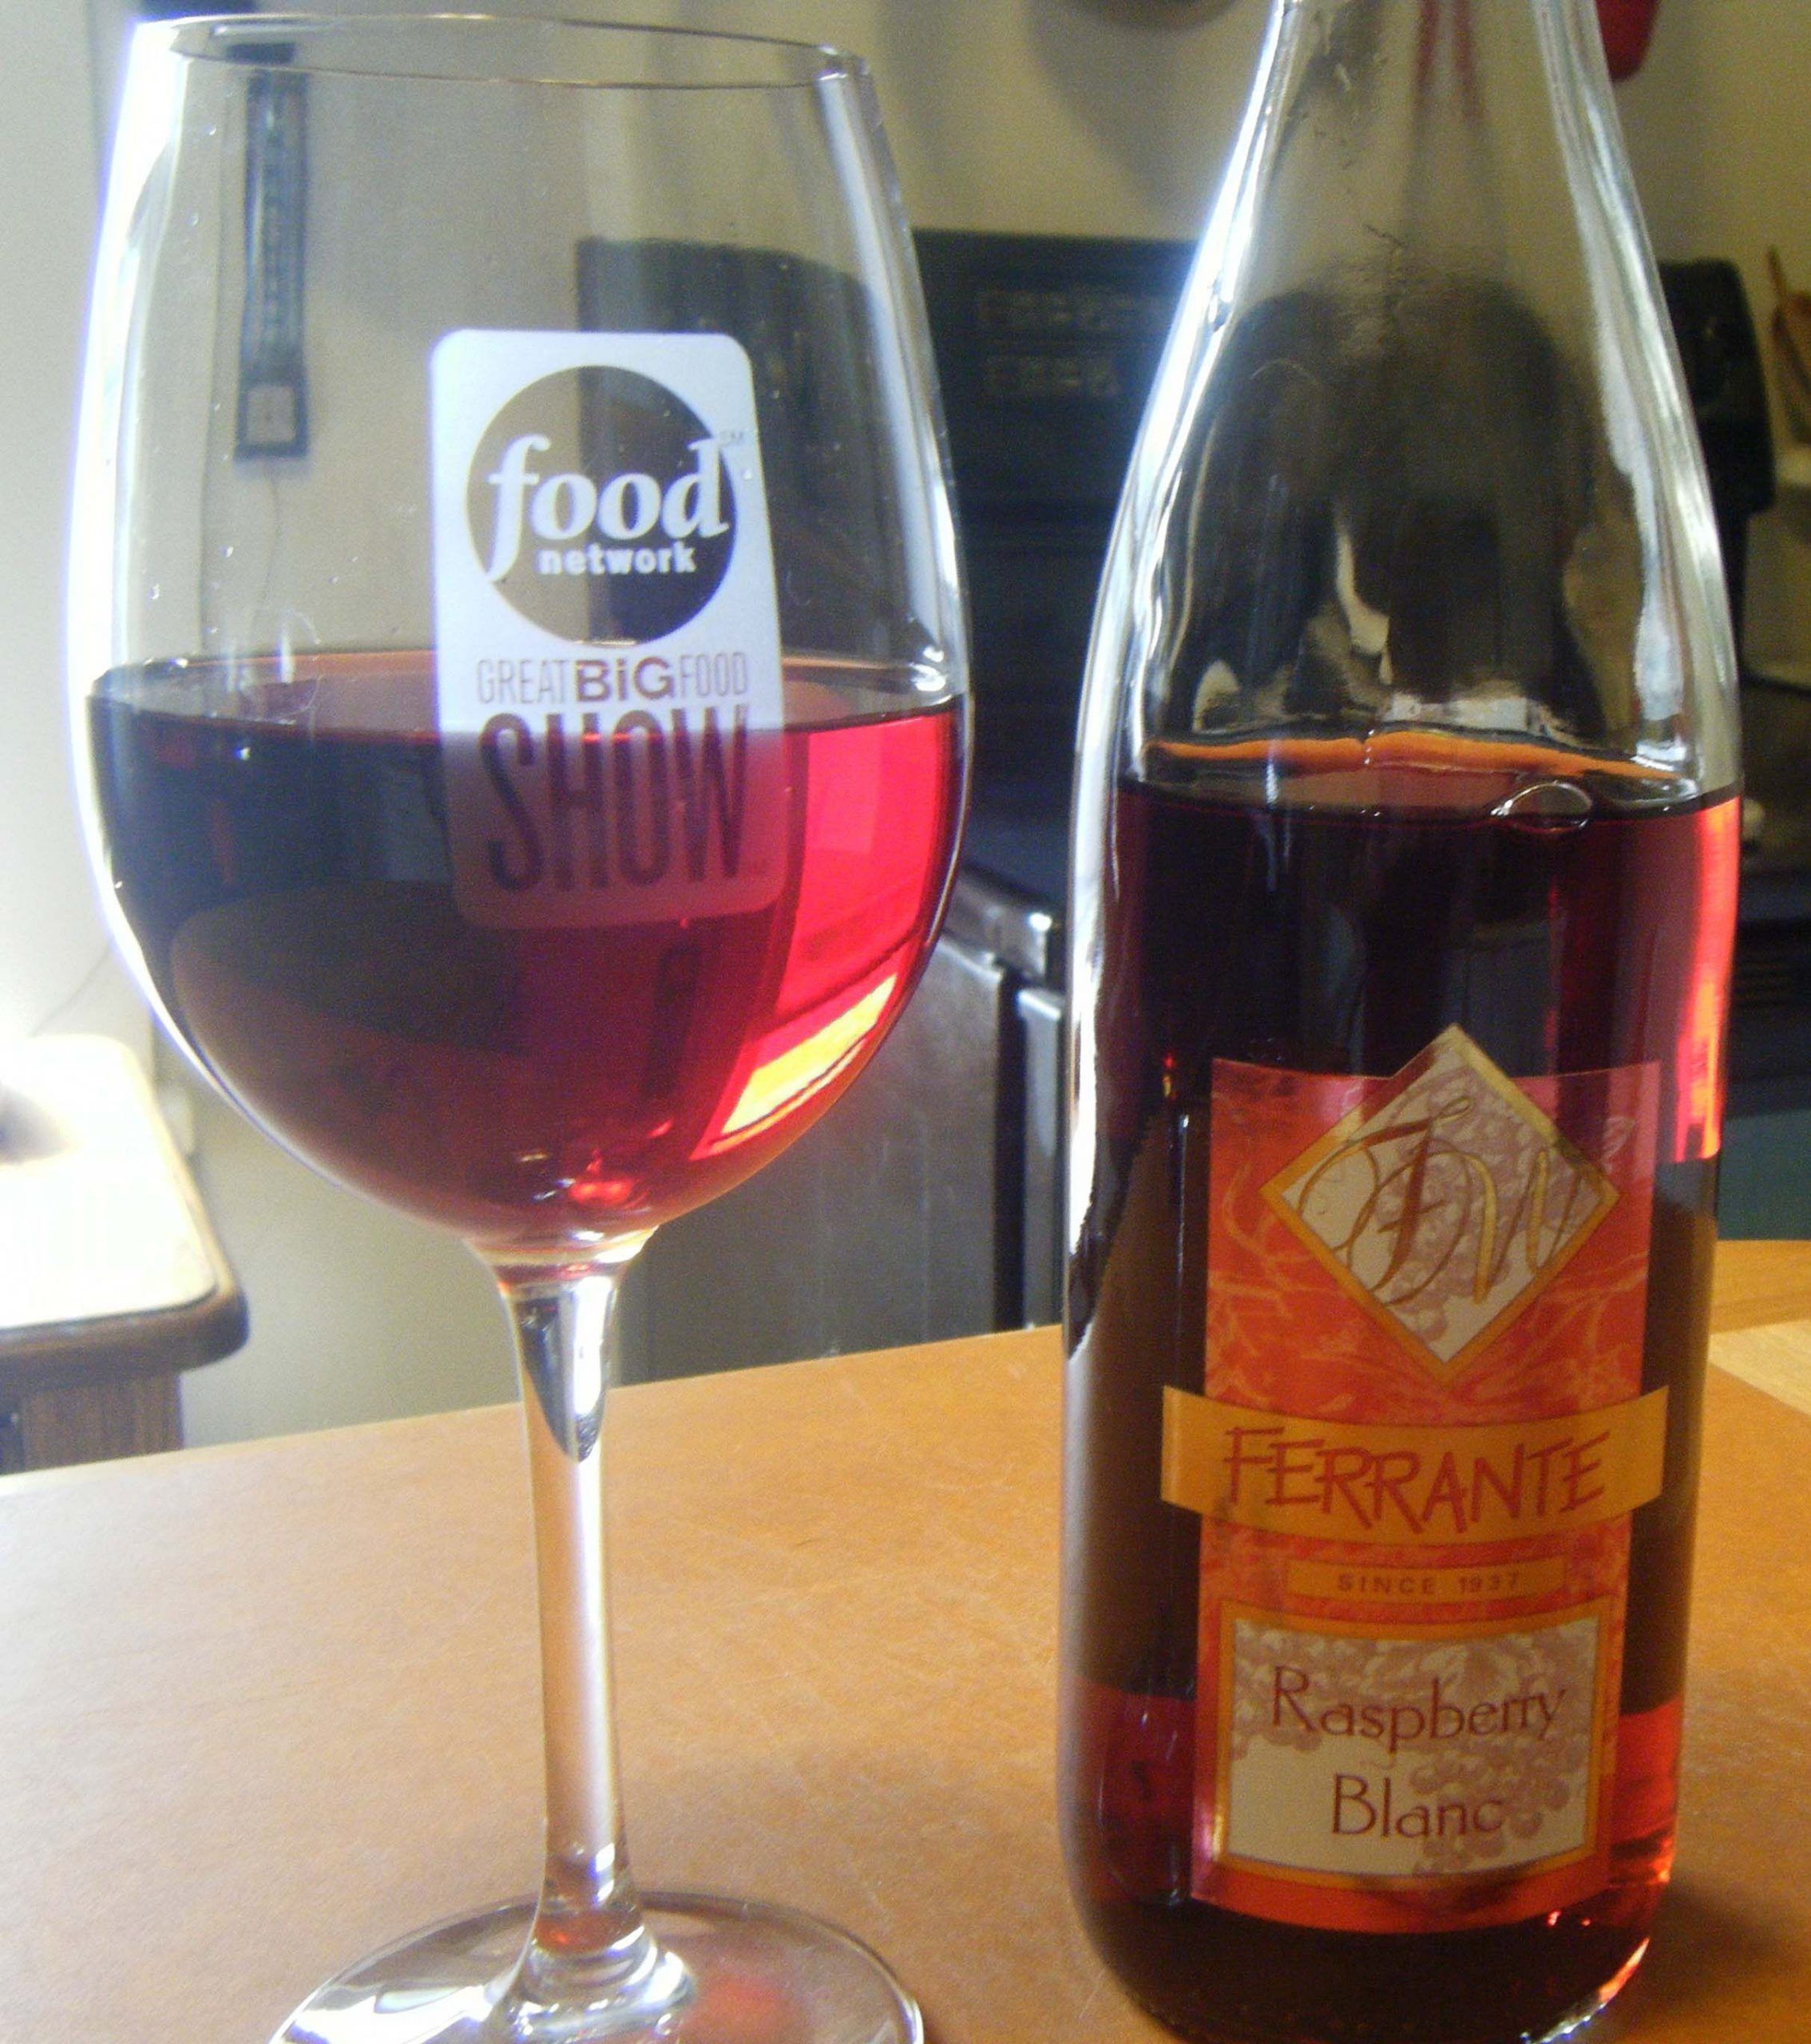 Ferrante, Raspberry Blanc, very smooth, easy to drink ...